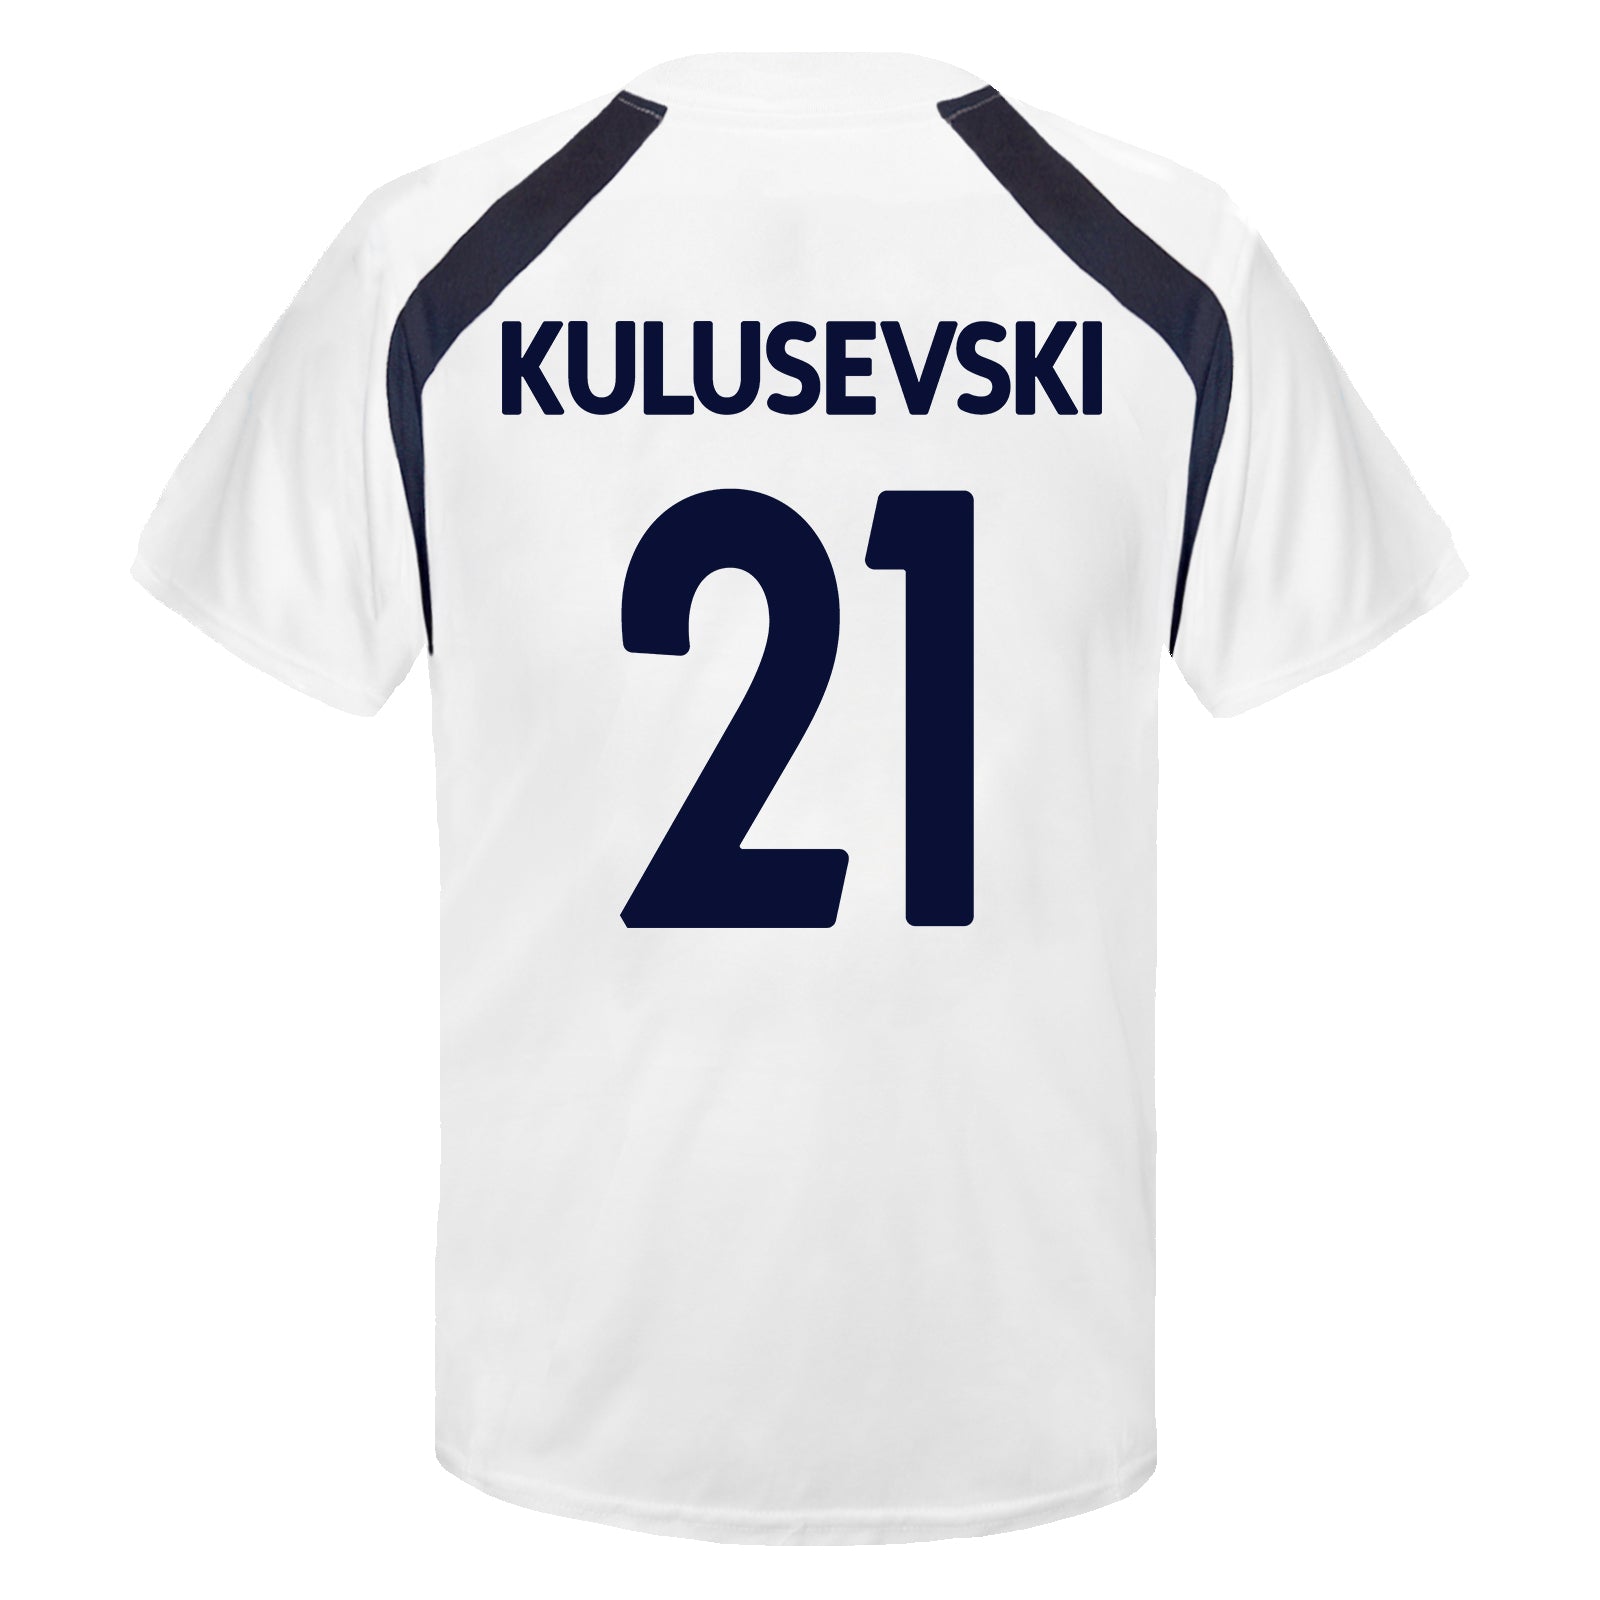 White Kulusevski